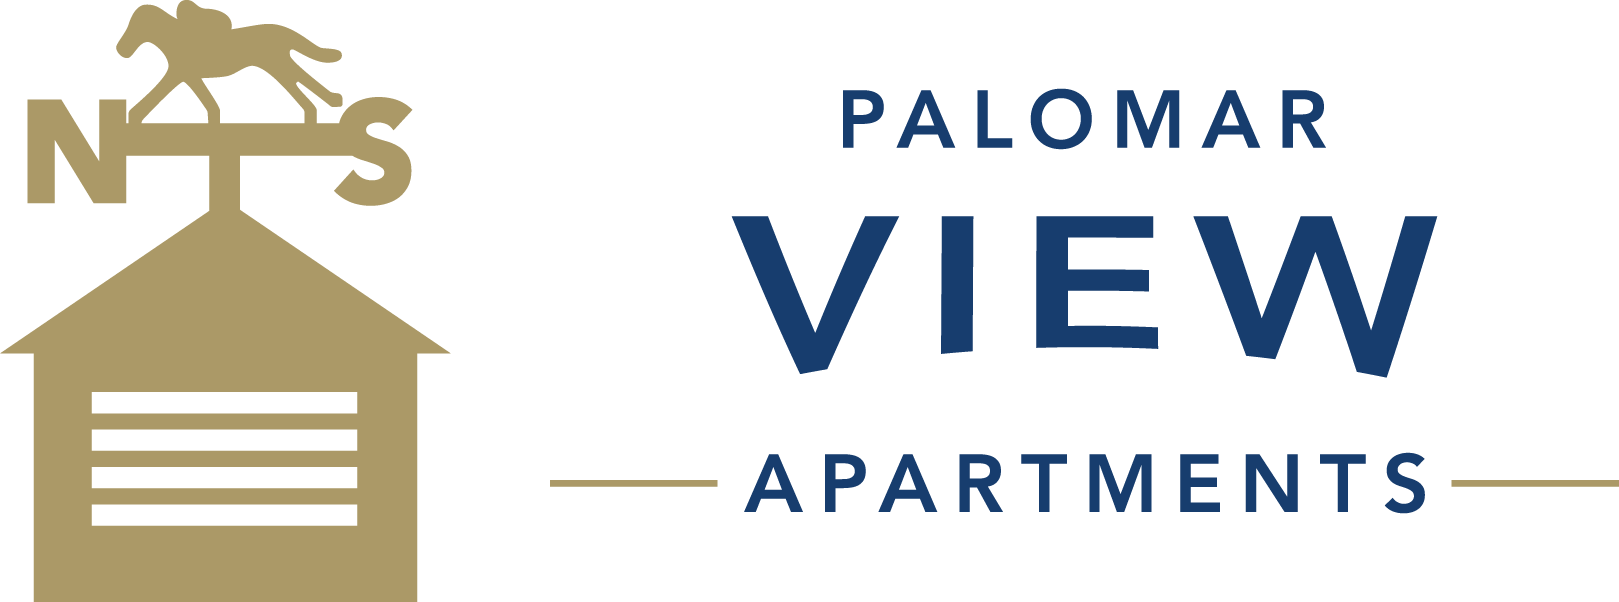 Palomar View Apartments Logo